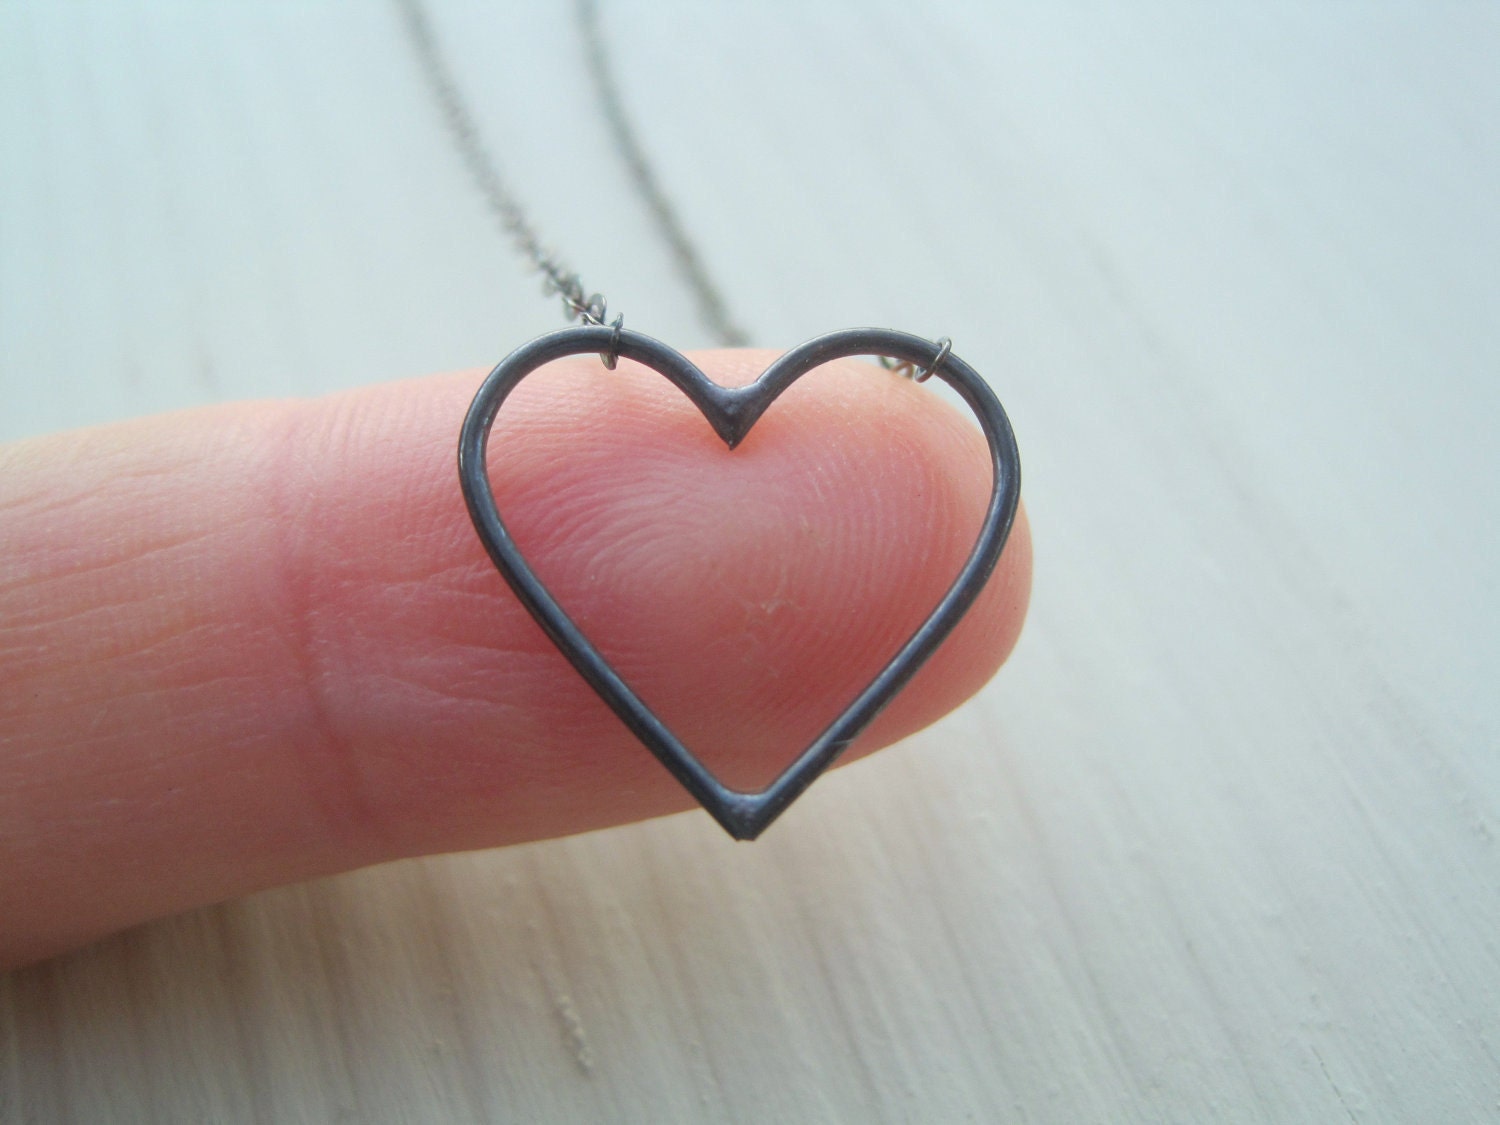 Black Heart Necklace - TINY HEART, oxidized sterling silver jewelry, small pendant, maryandjane - maryandjane